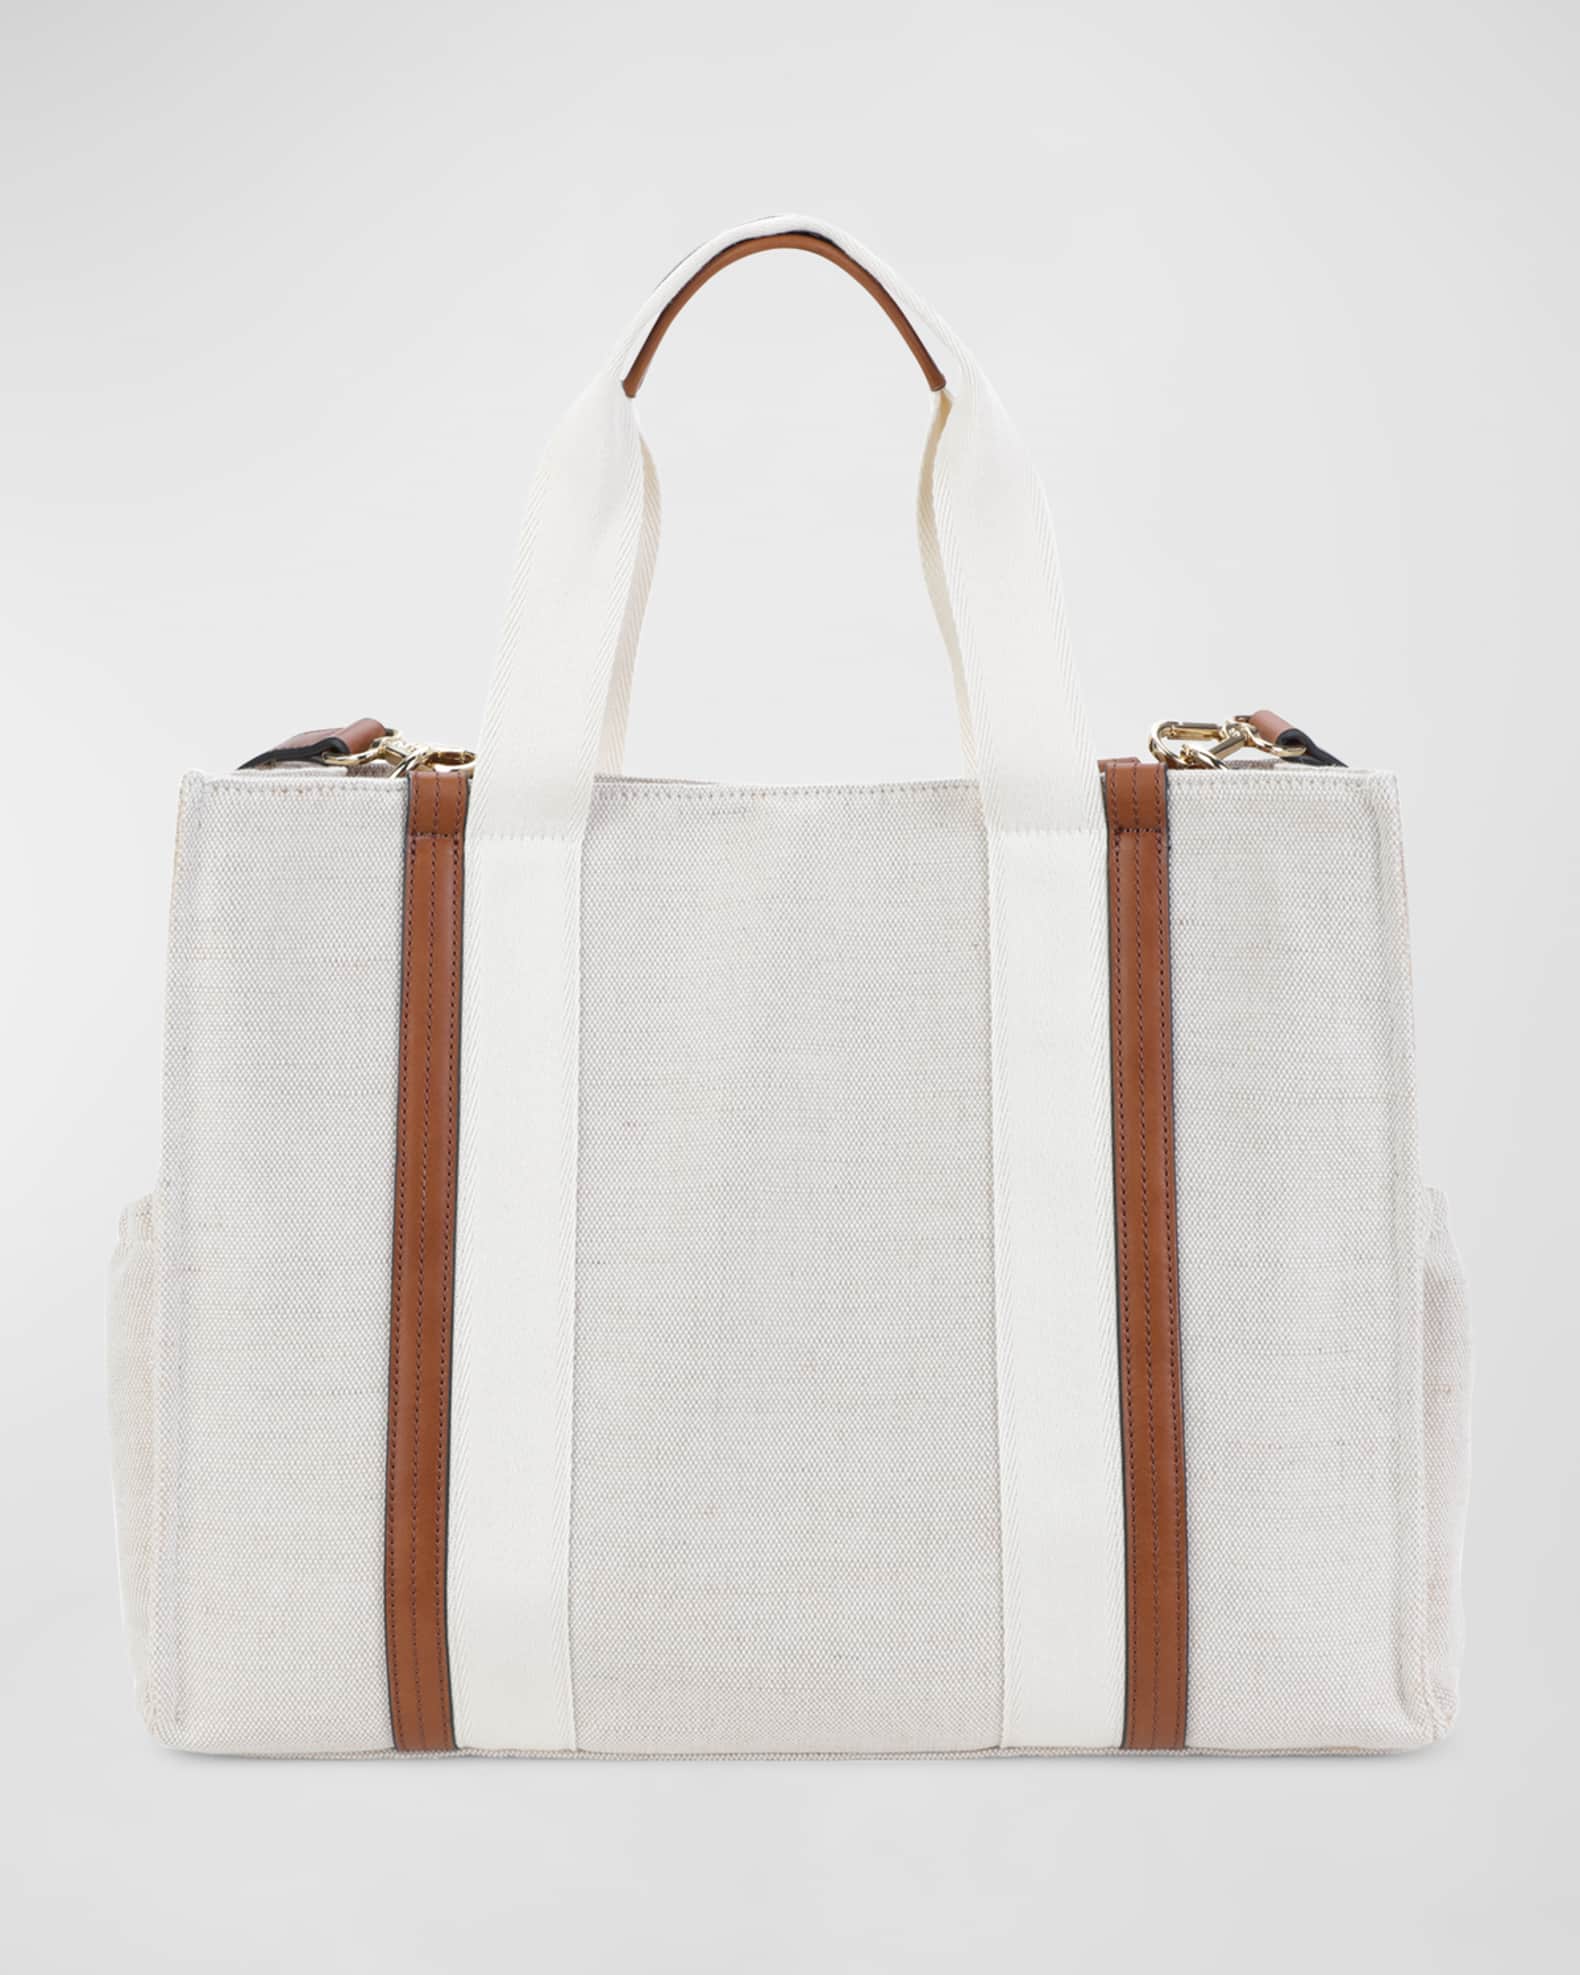 Louis Vuitton Original Limited Tote Bag Canvas White Multi Free Shipping